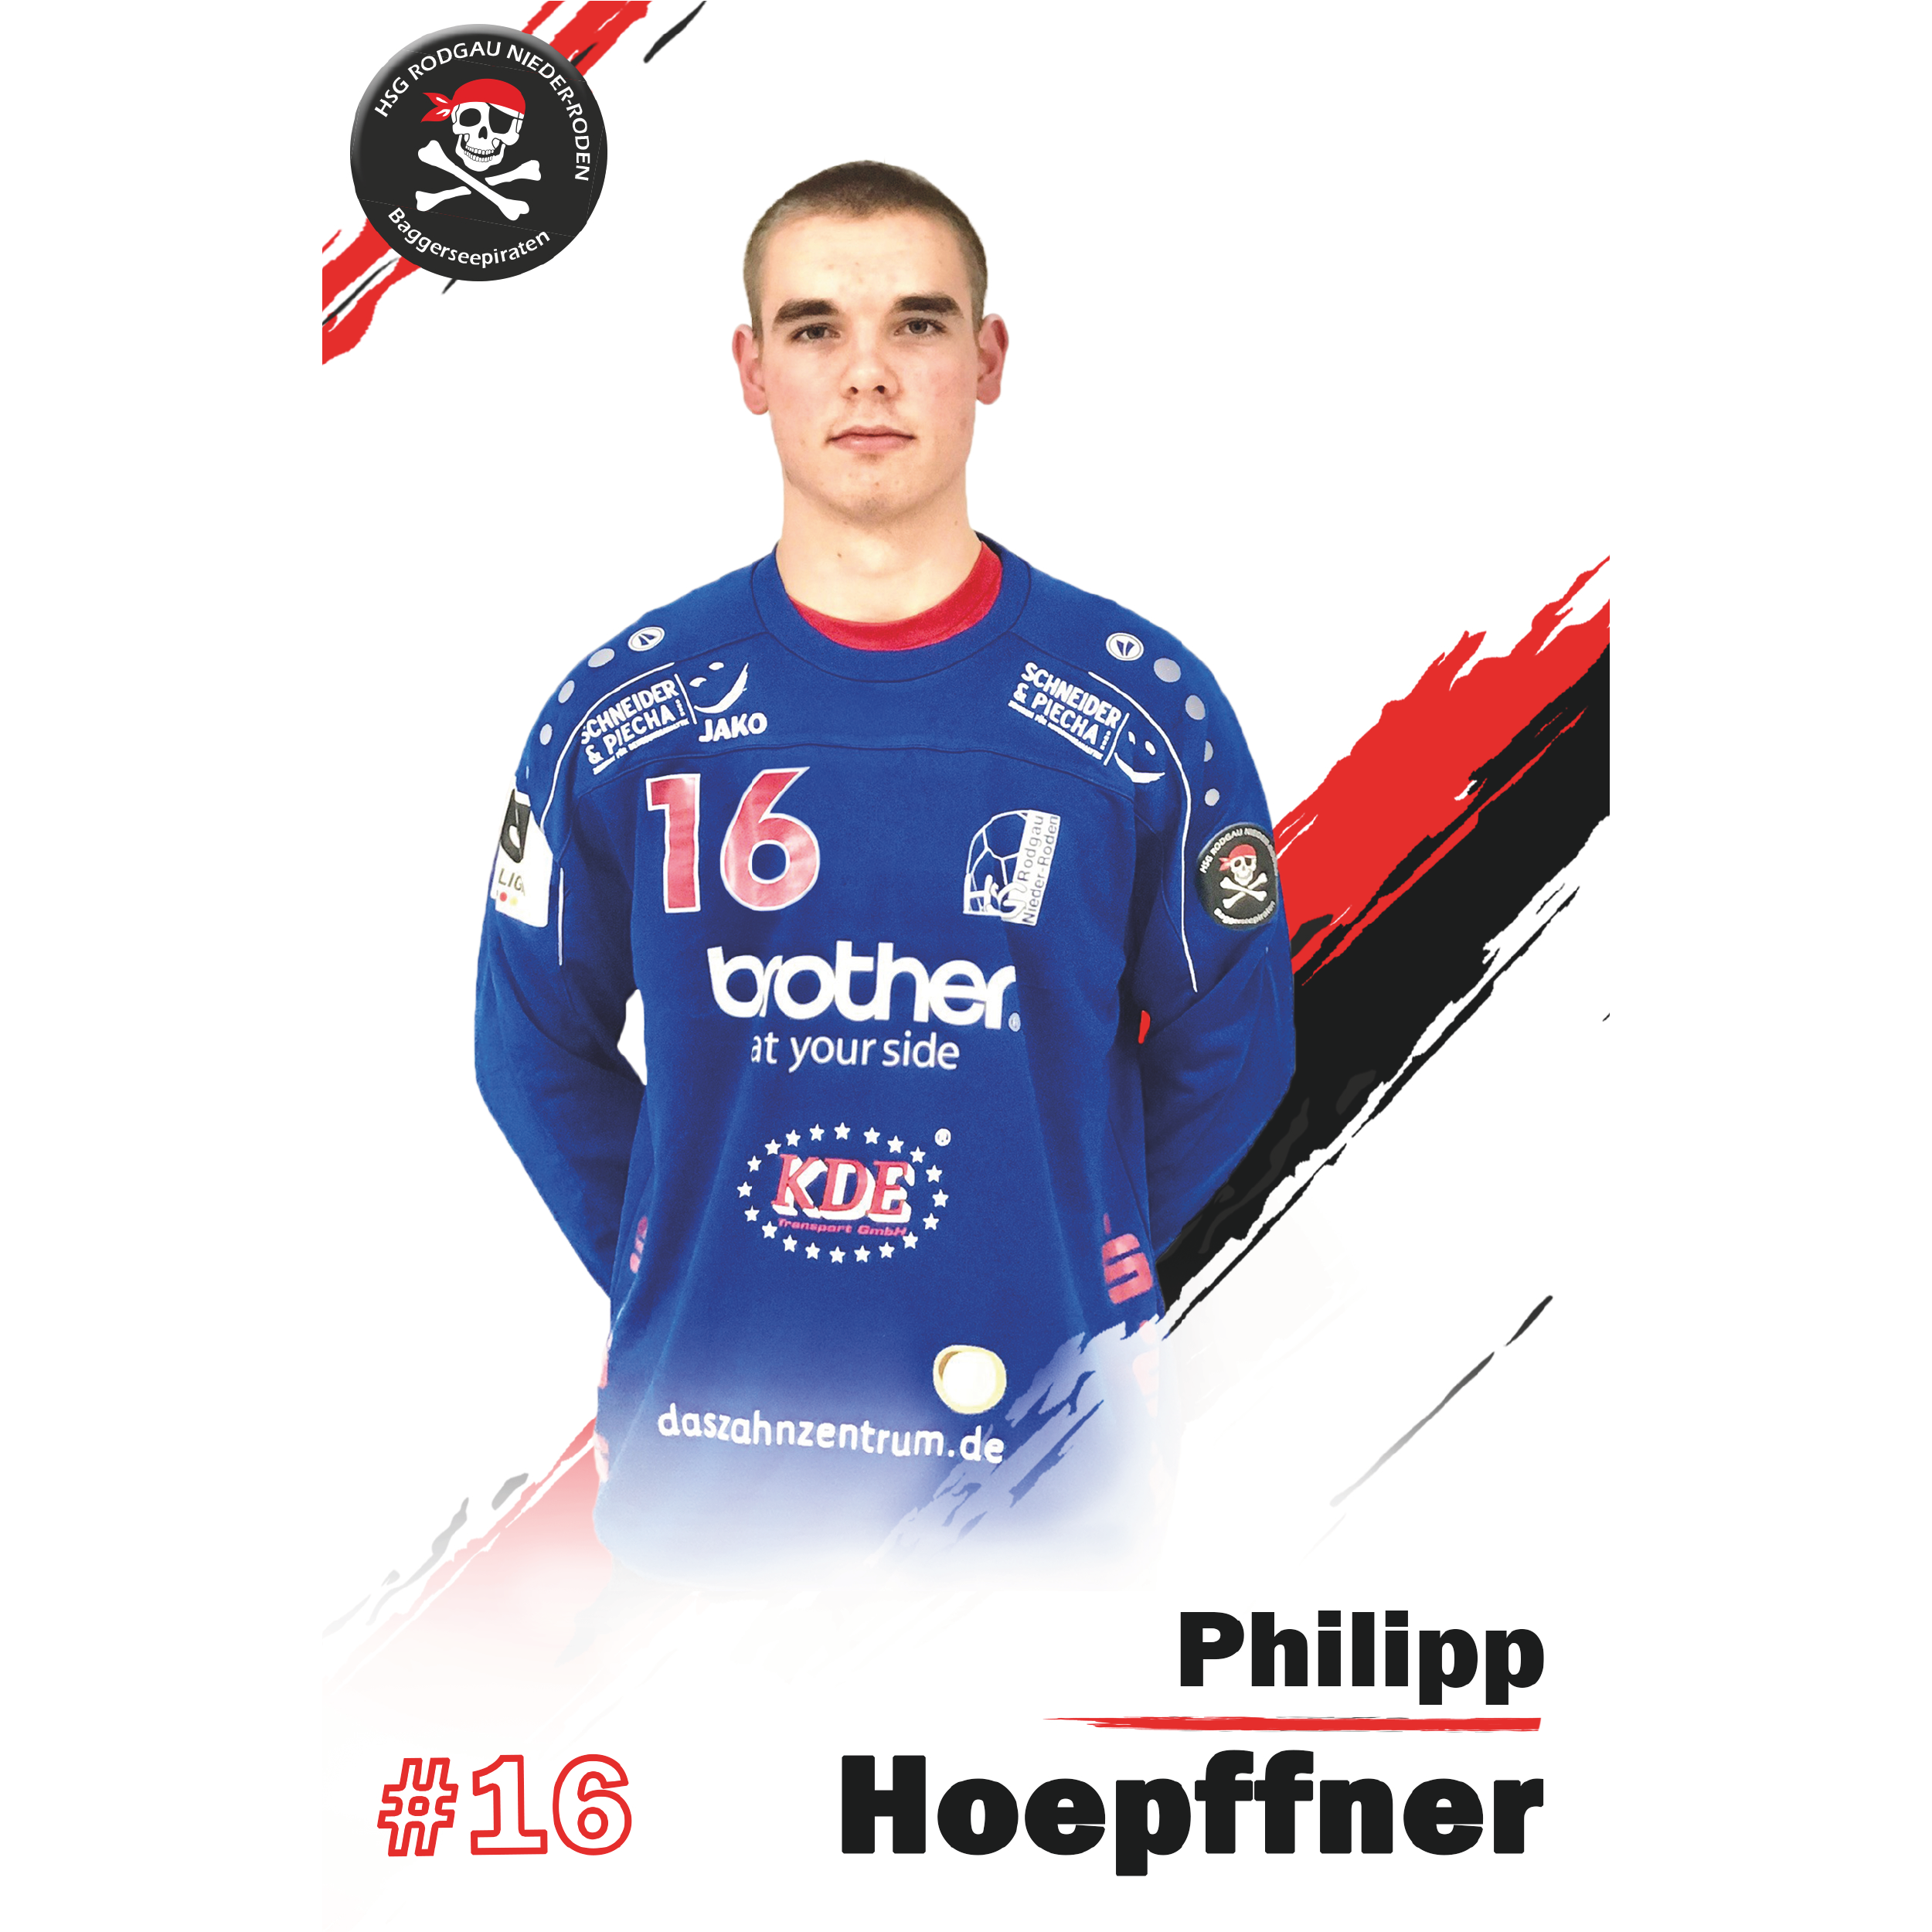 Philipp Hoepffner